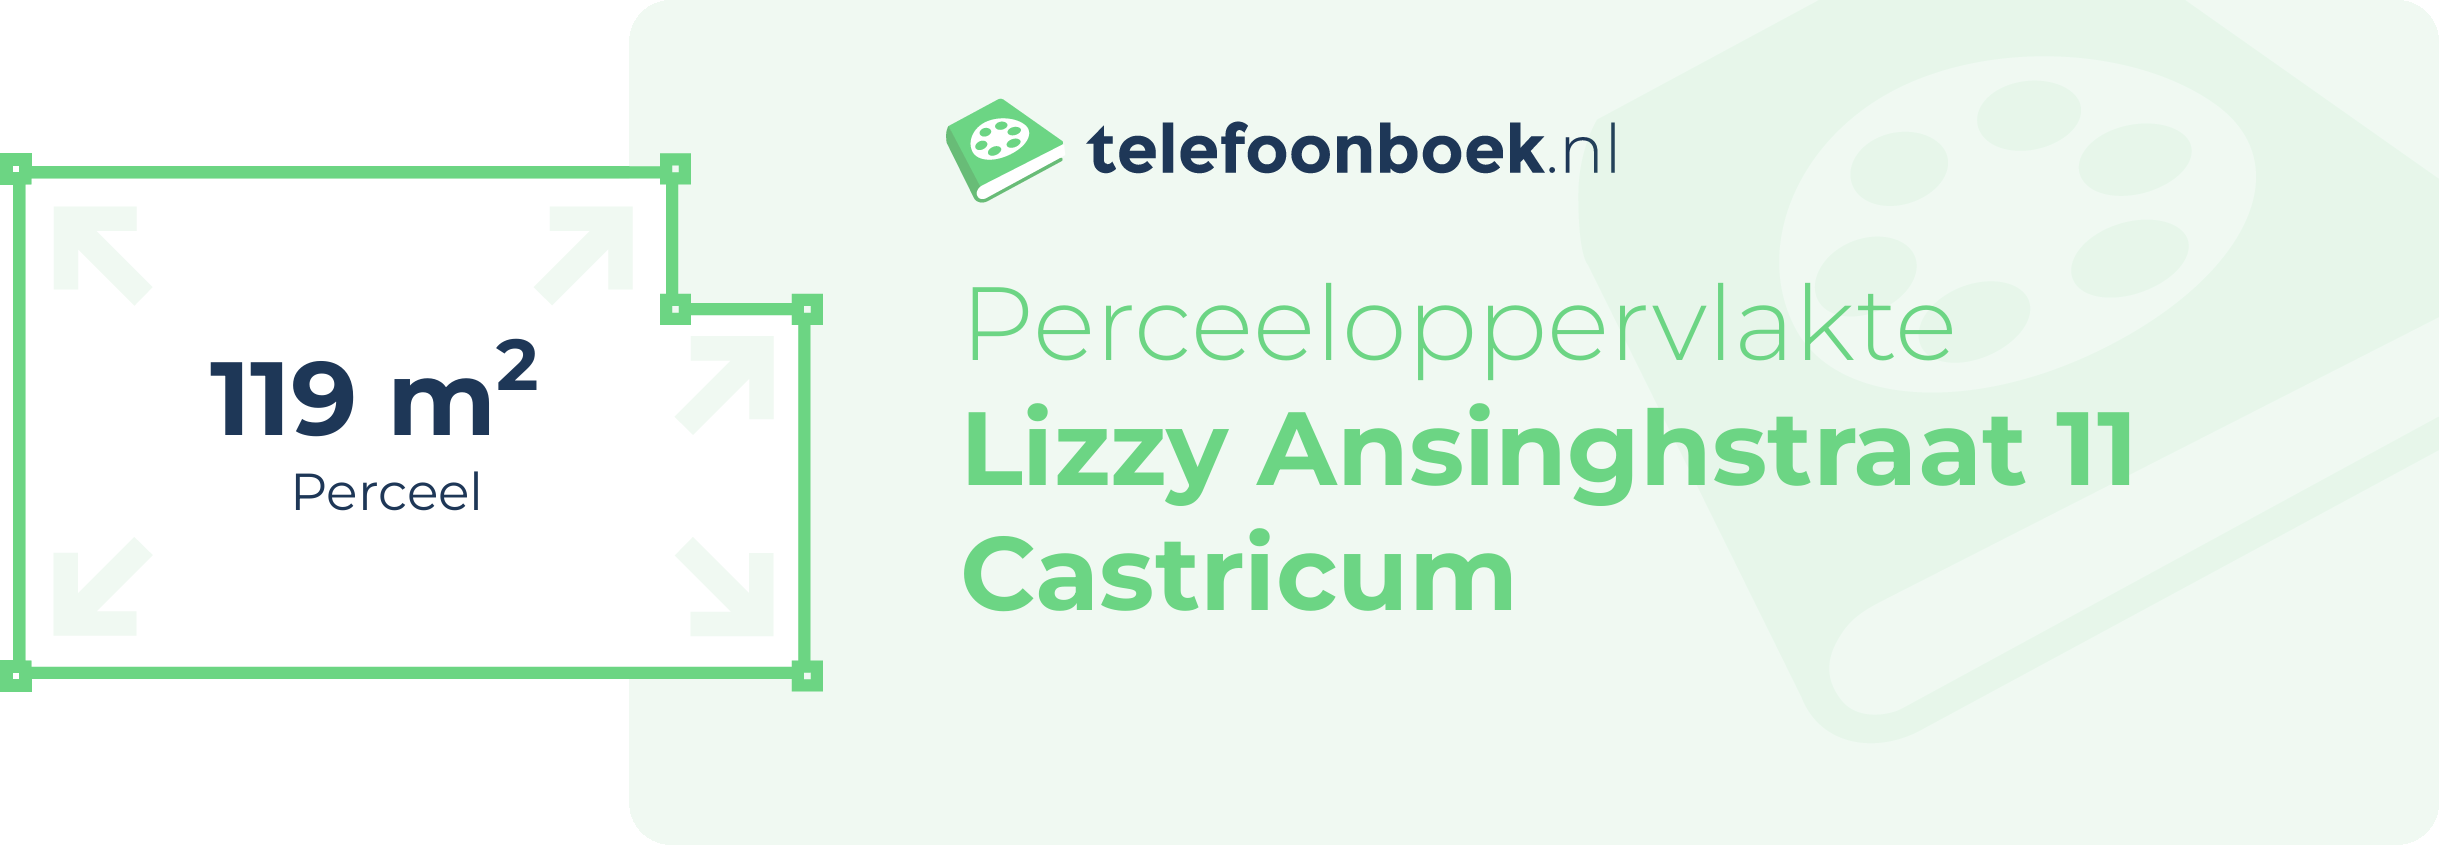 Perceeloppervlakte Lizzy Ansinghstraat 11 Castricum